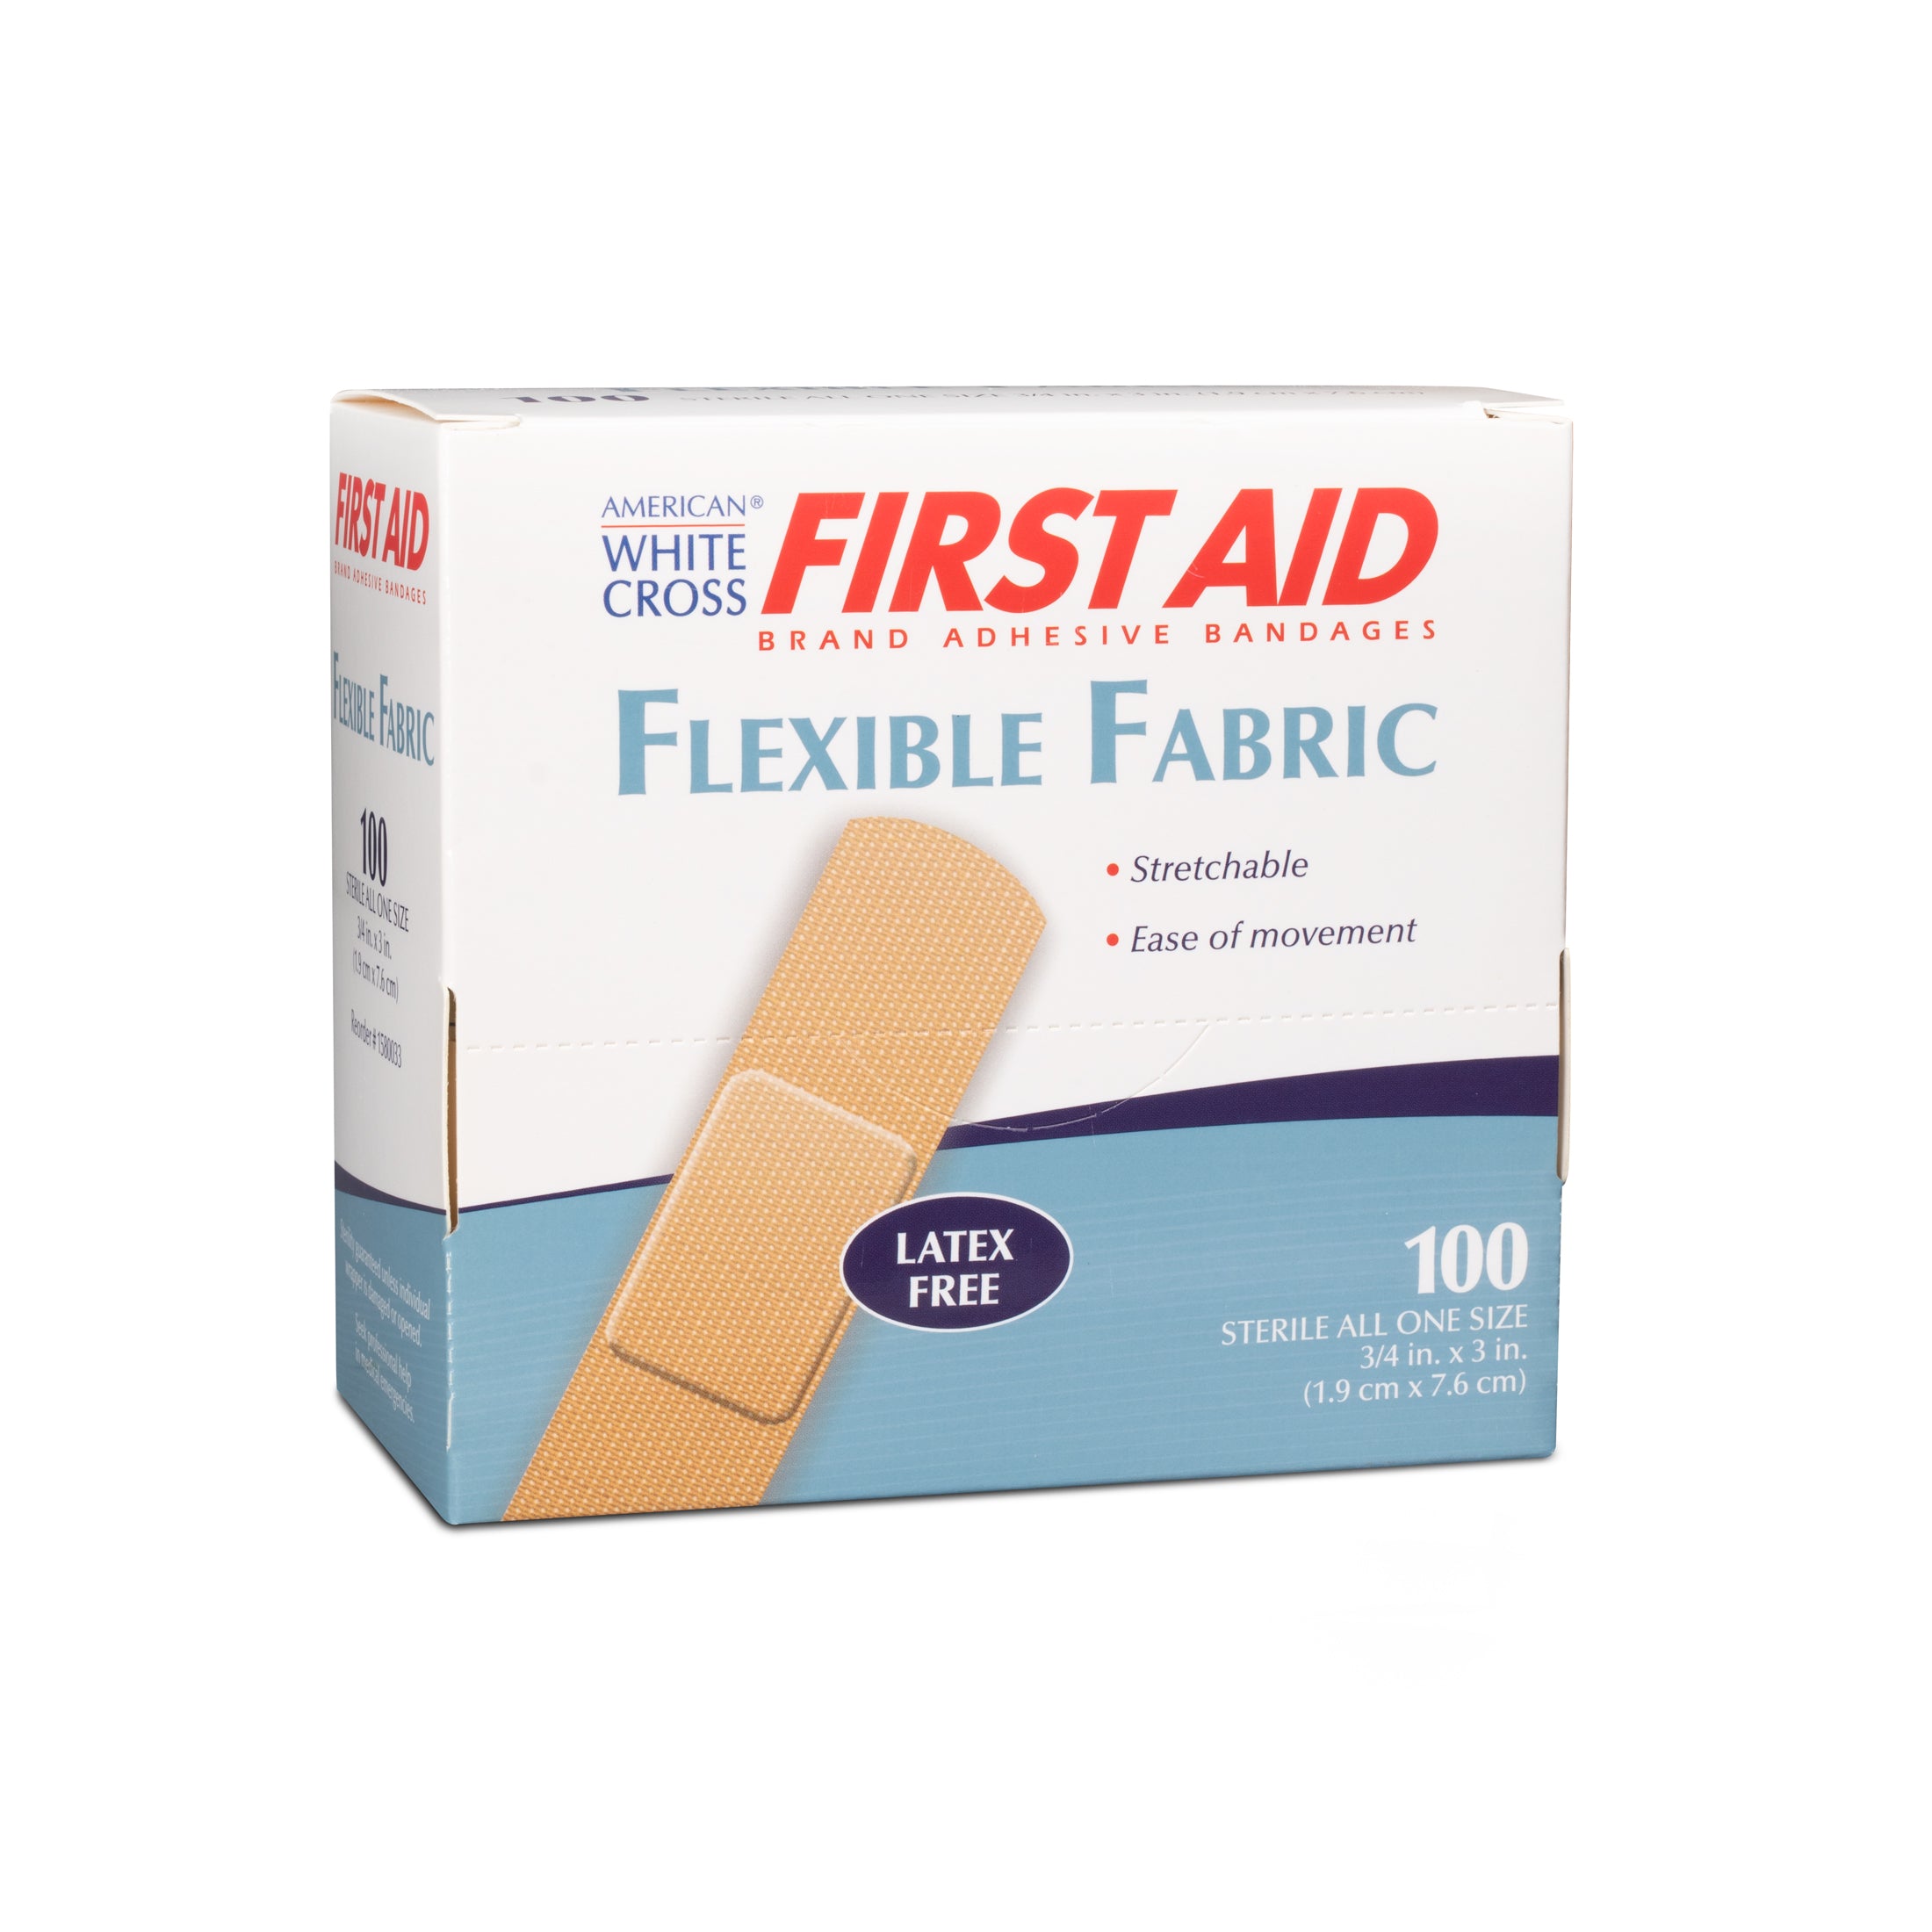 Band-Aid Flexible Fabric Adhesive Bandages 3/4 X 3 100 Ct